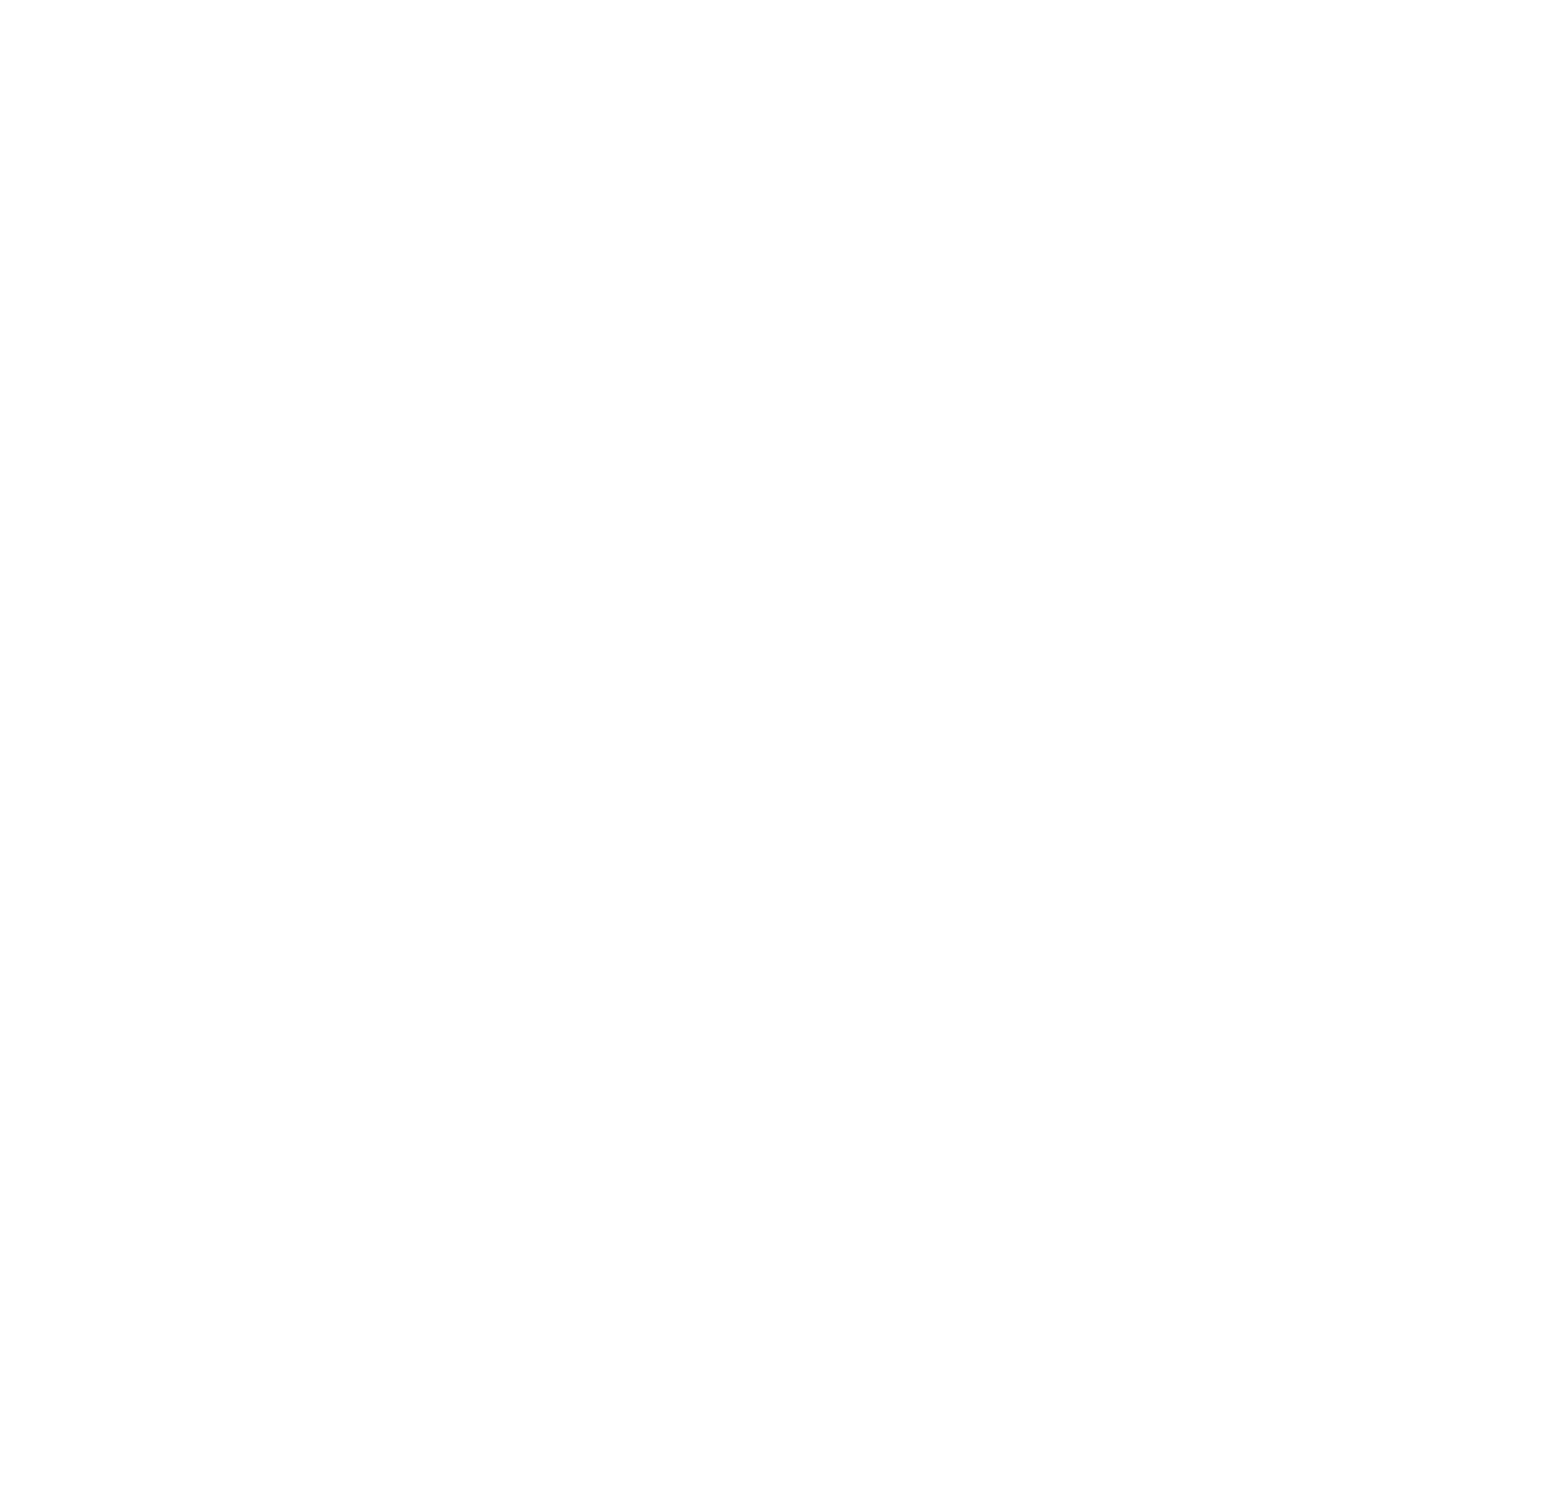 ManyDev Studio logo pour fonds sombres (PNG transparent)